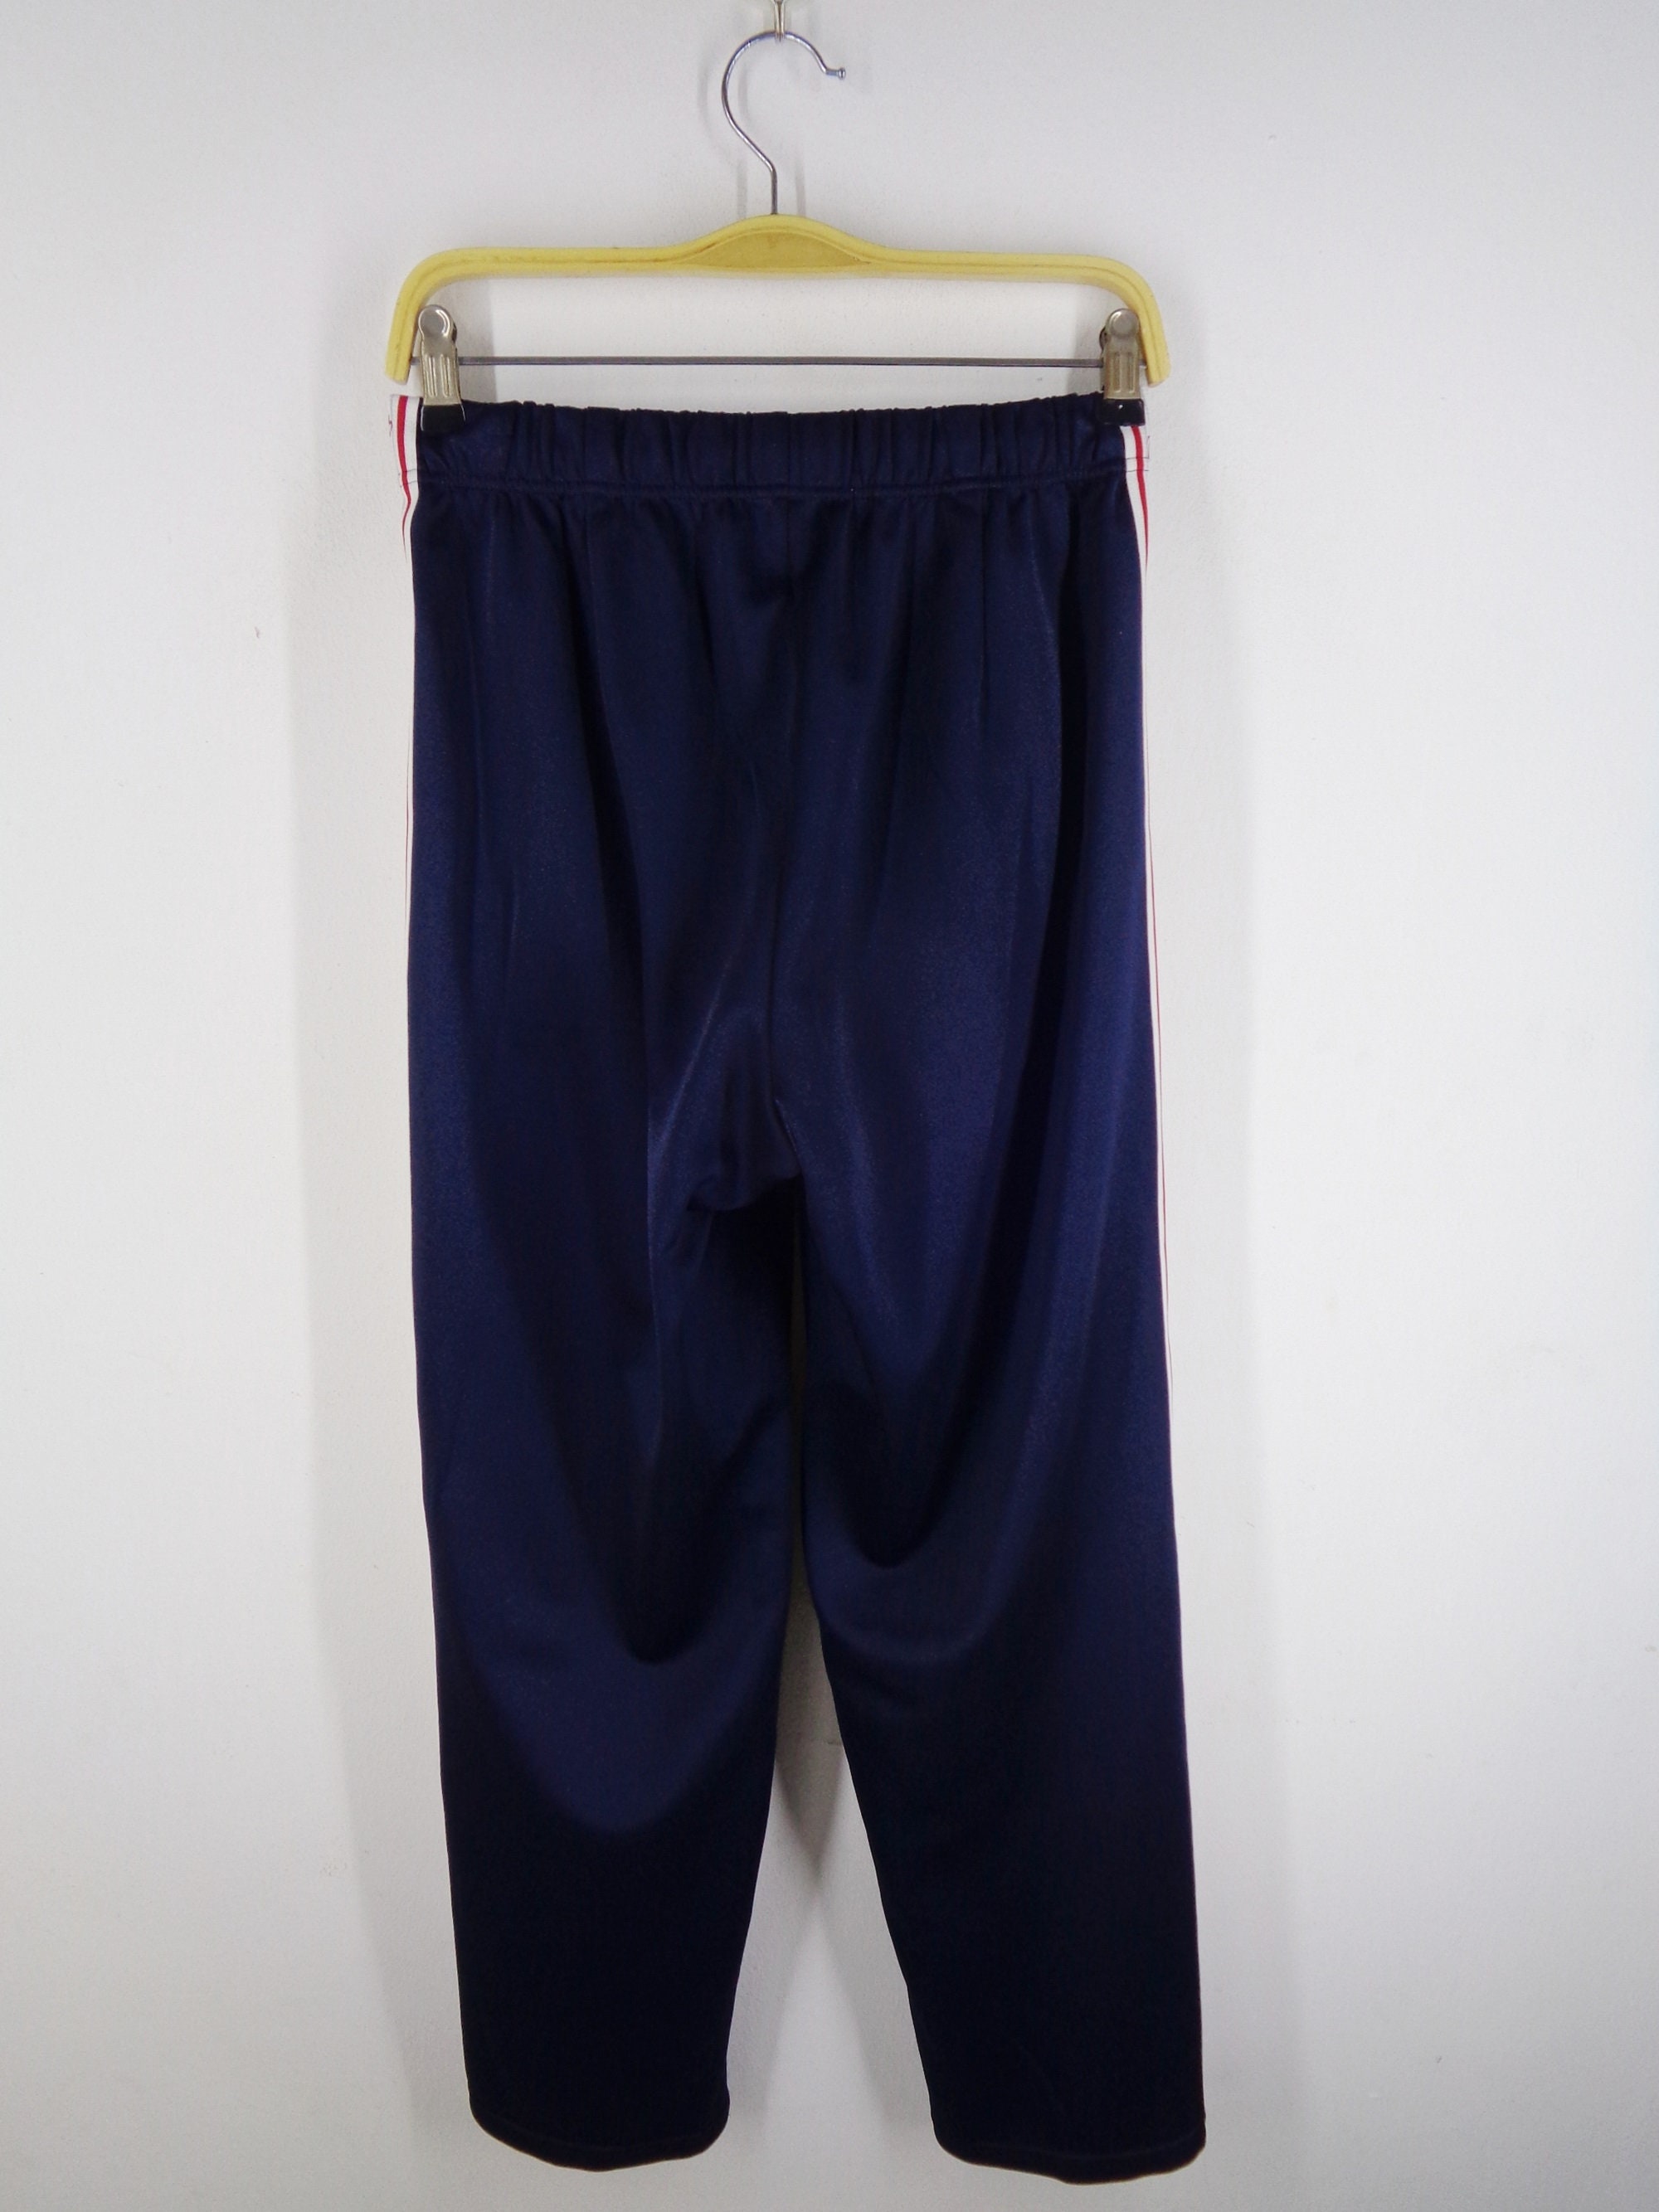 Asics Pants Vintage Size Jaspo O Asics Track Bottom Pants 90s | Etsy